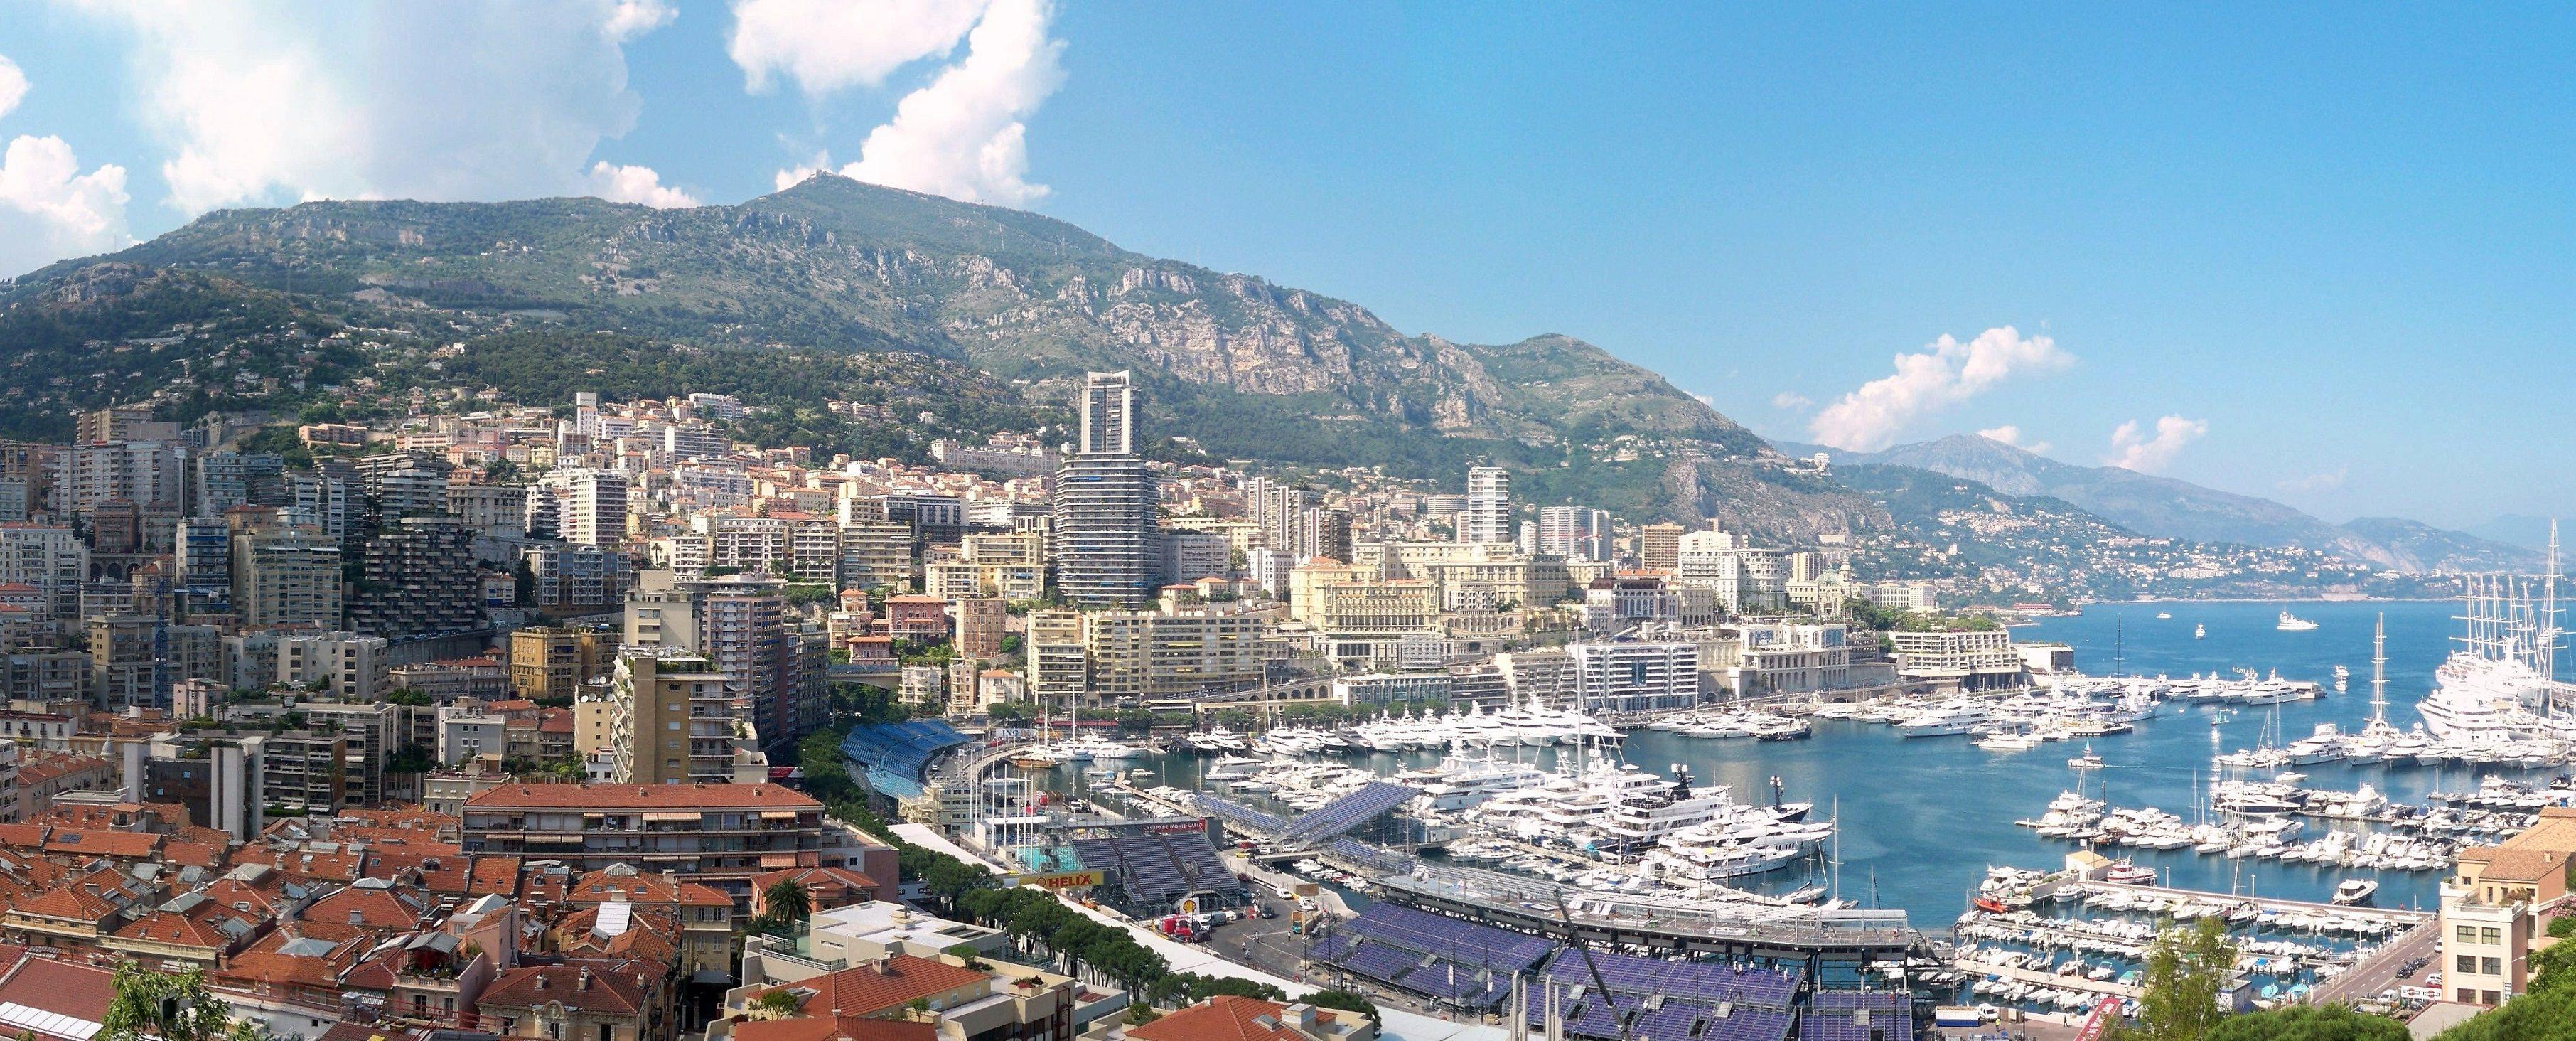 Monte Carlo Wallpaper Image Photo Picture Background